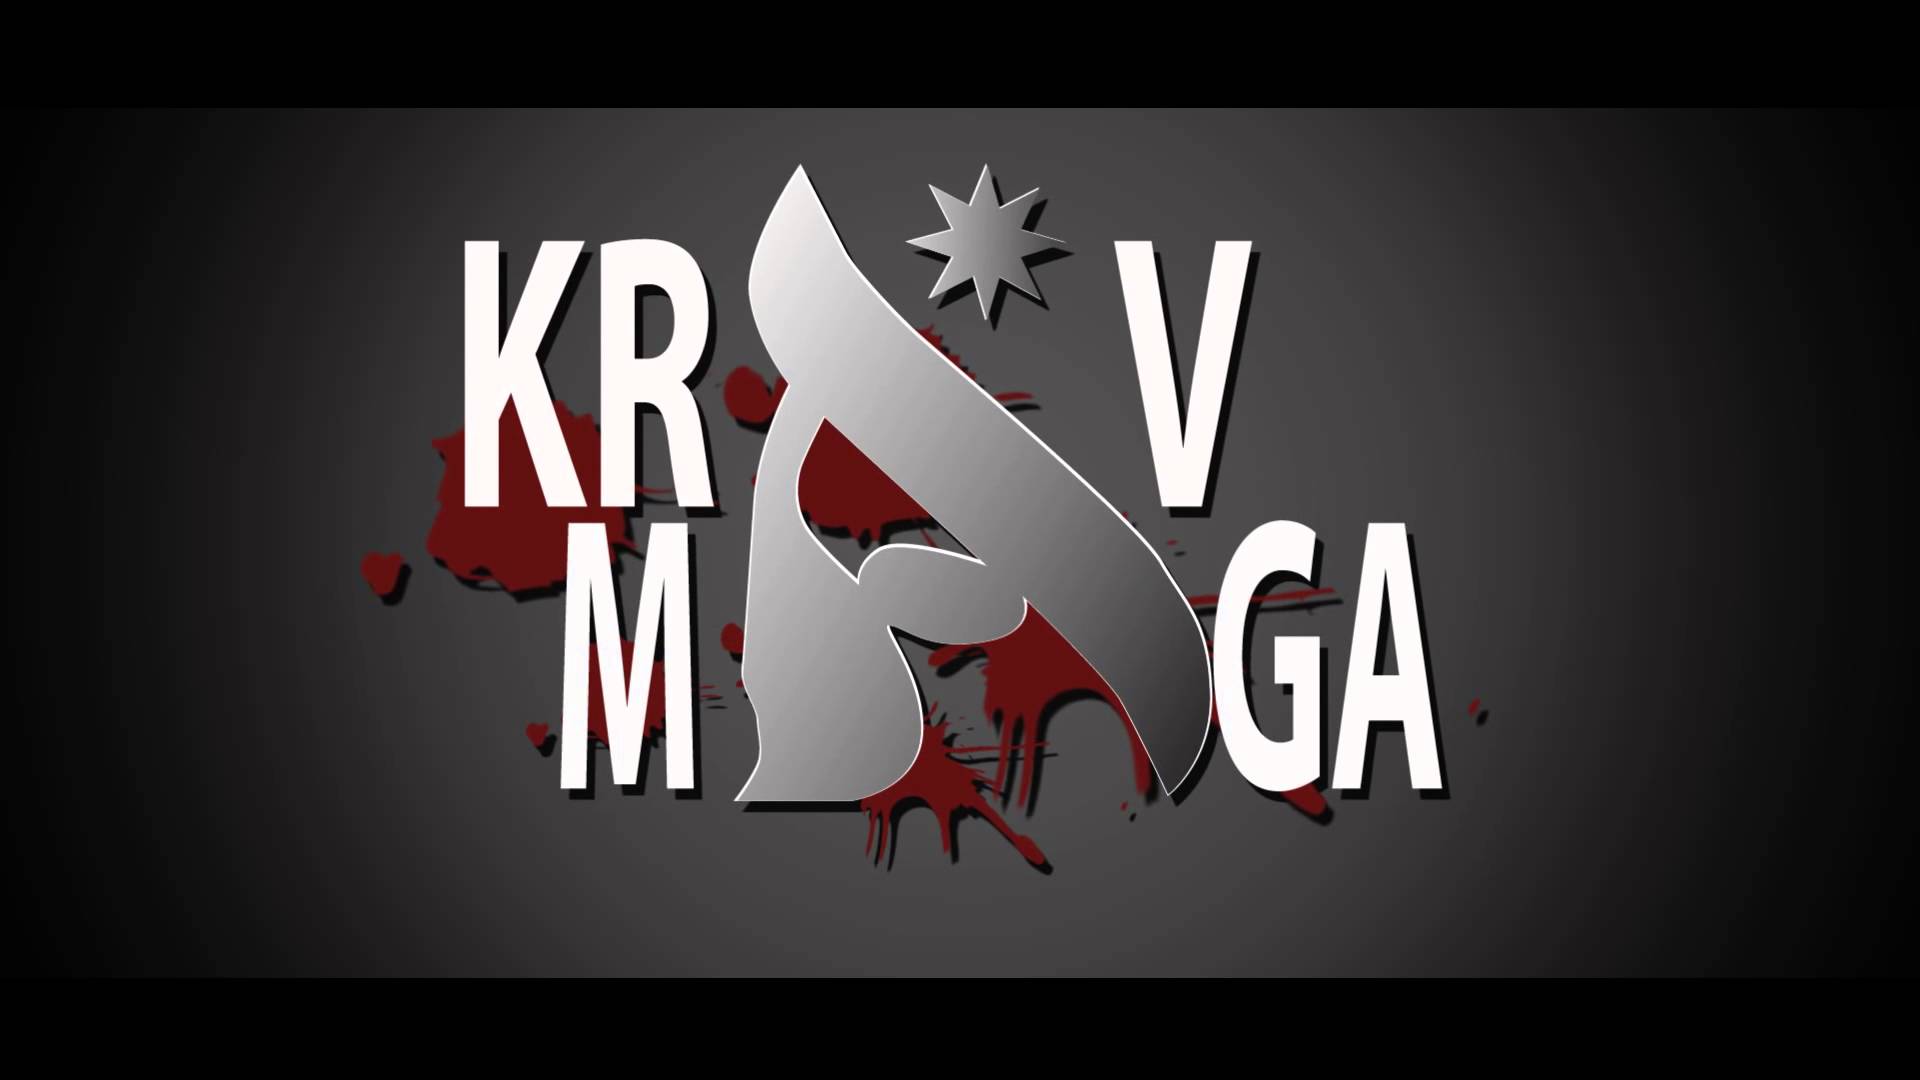 A Star Krav Maga logo animation prototype